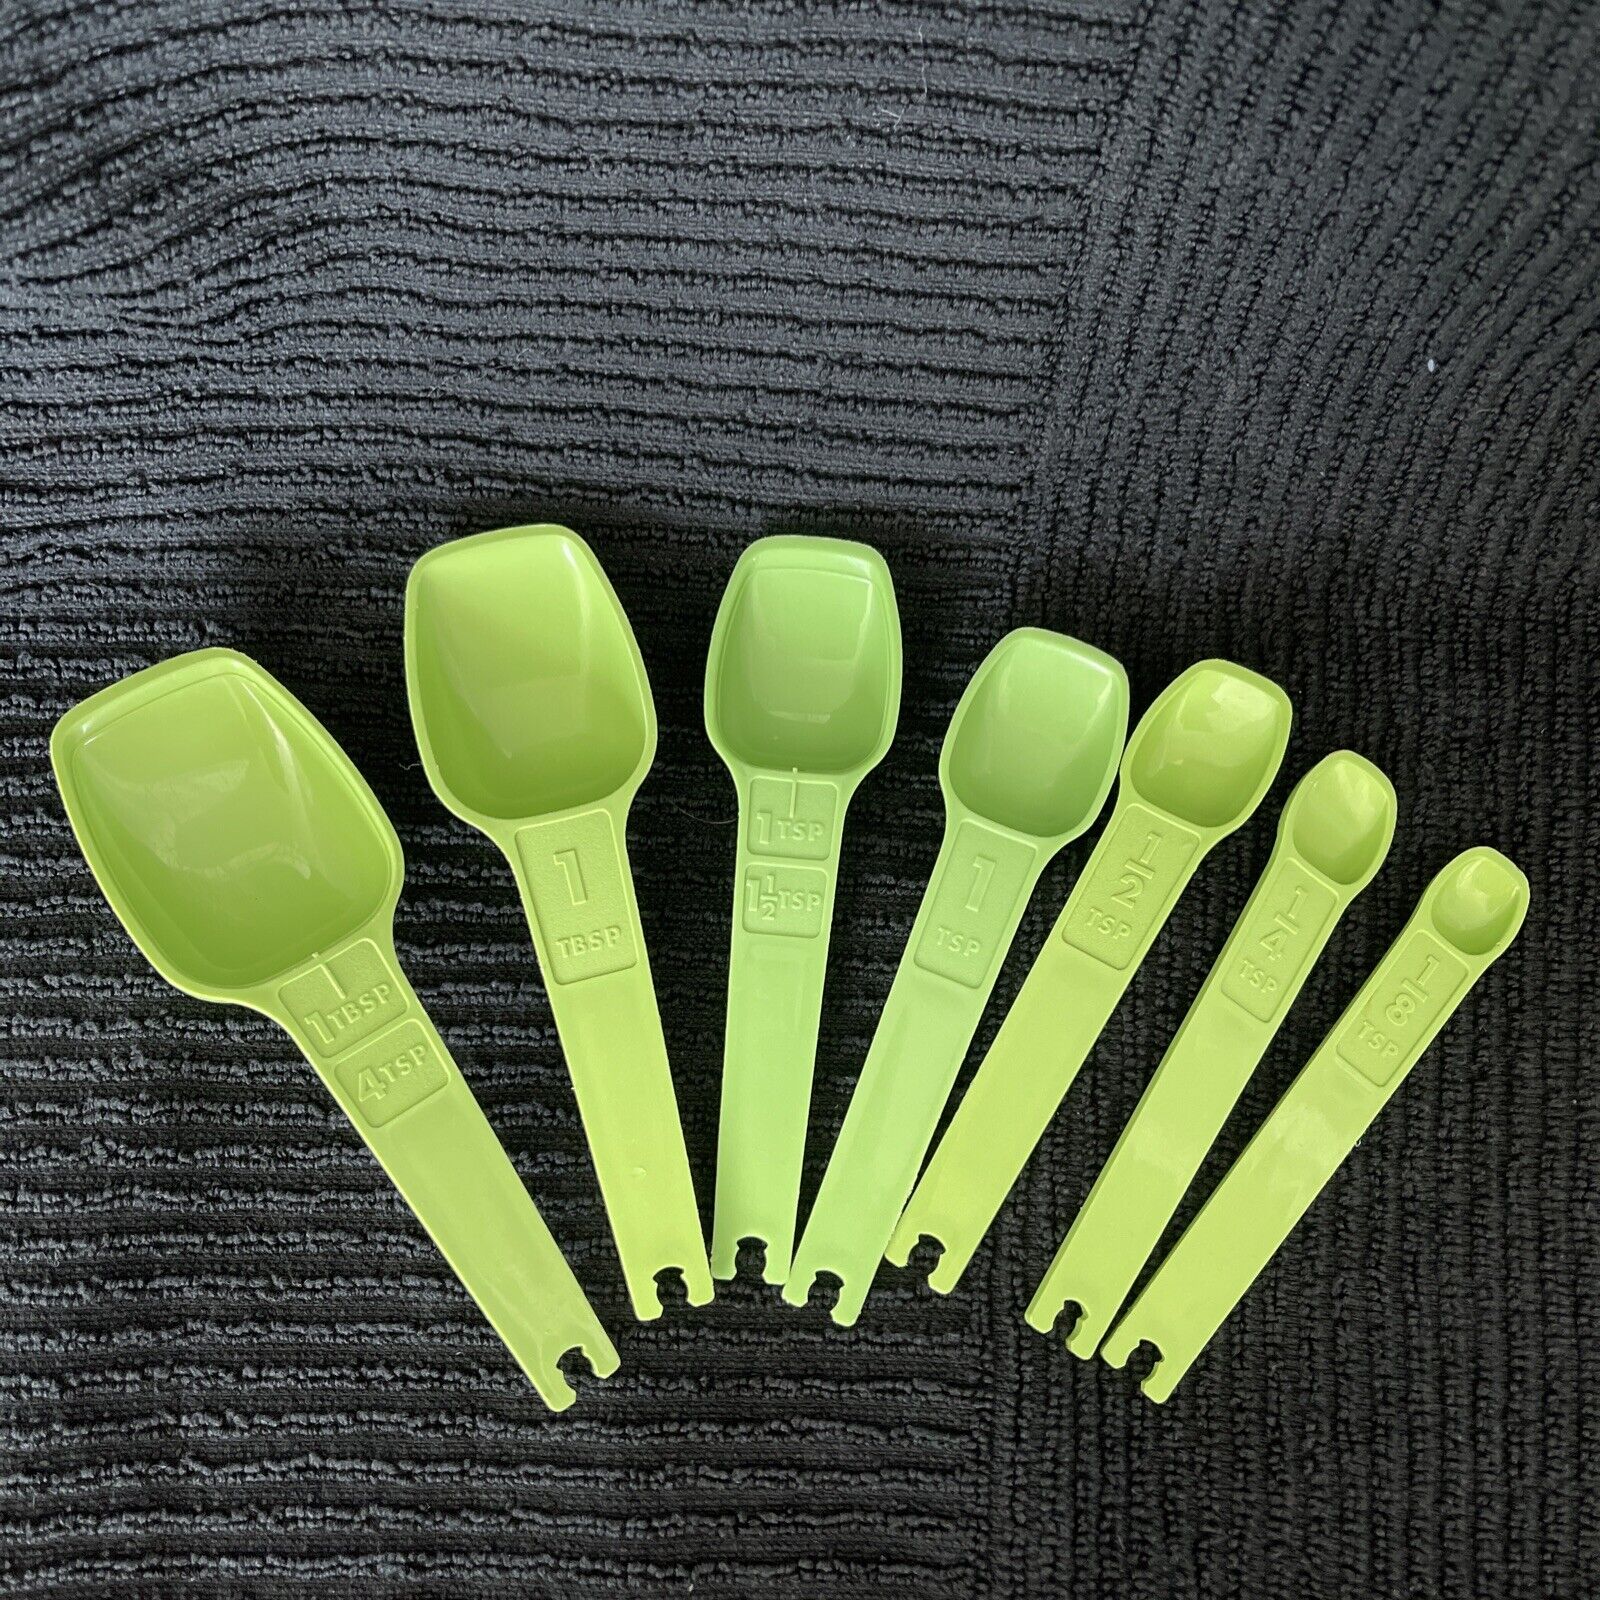 Vintage Tupperware Set Of 7 Measuring Spoons Green - No Ring